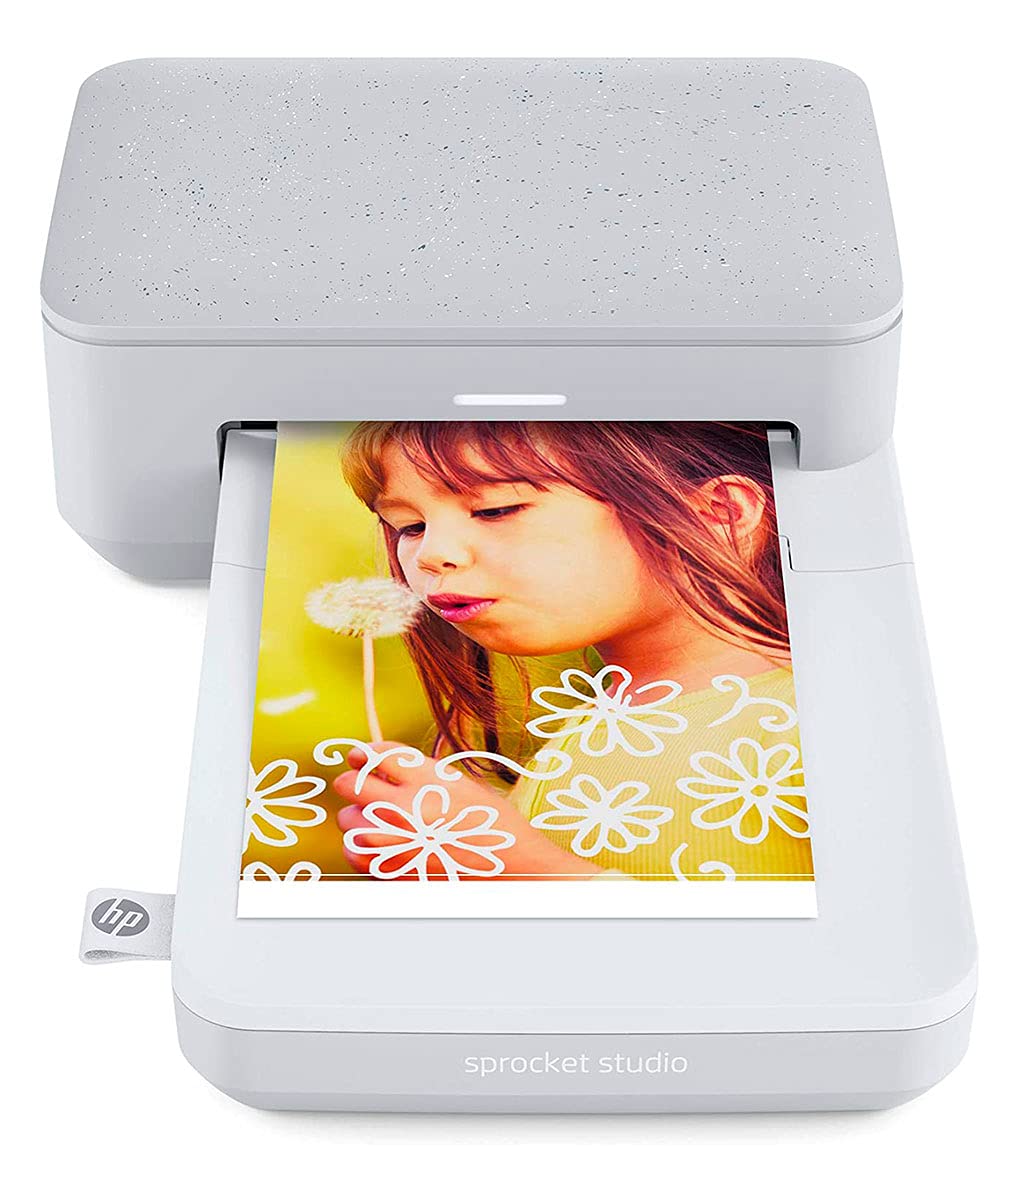 Impressora instantânea portátil HP Sprocket Studio Bluetooth para fotos 10x15cm